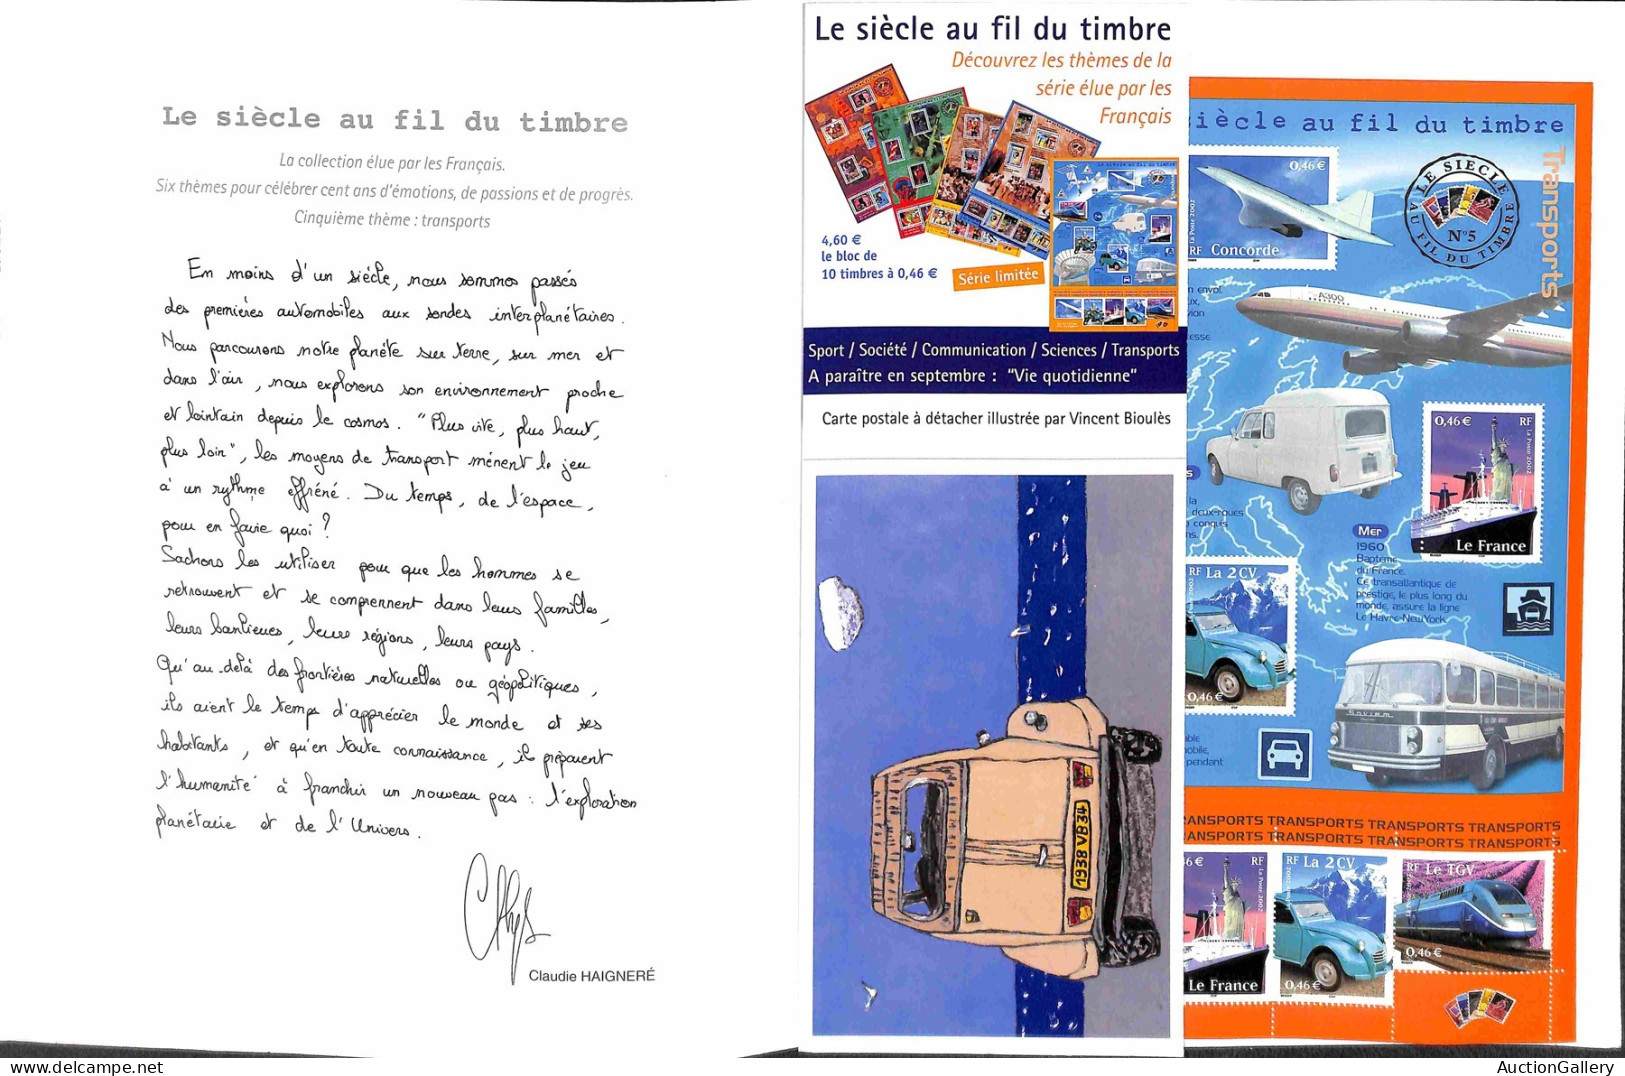 EUROPA - FRANCIA - 2001/2002 - Le Siecle au Fil du Timbre (n. 3 + 4 + 5 + 6) - insieme di 4 folder con i 4 minifogli del